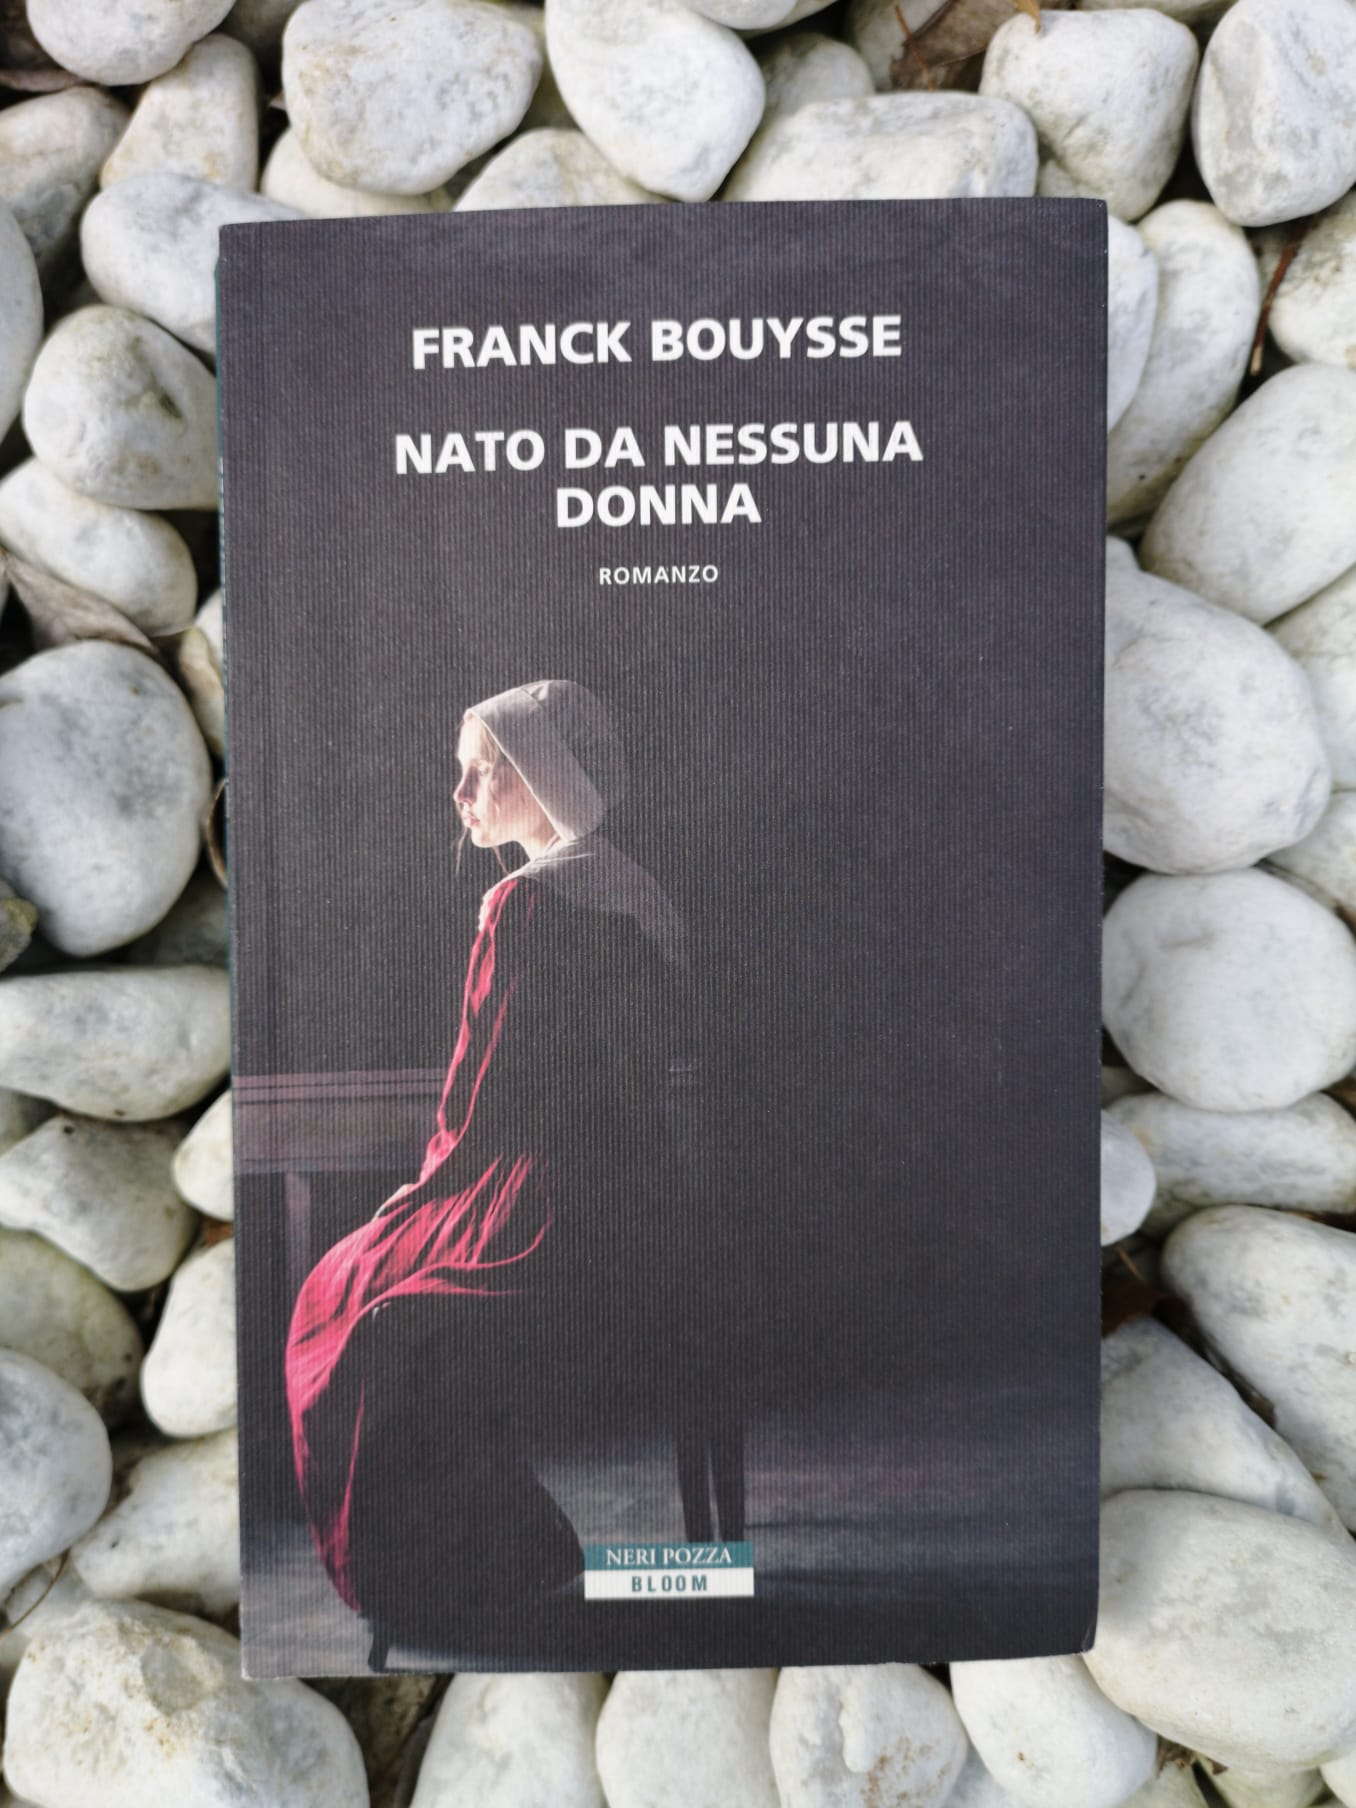 Franck Bouysse - Nato da nessuna donna